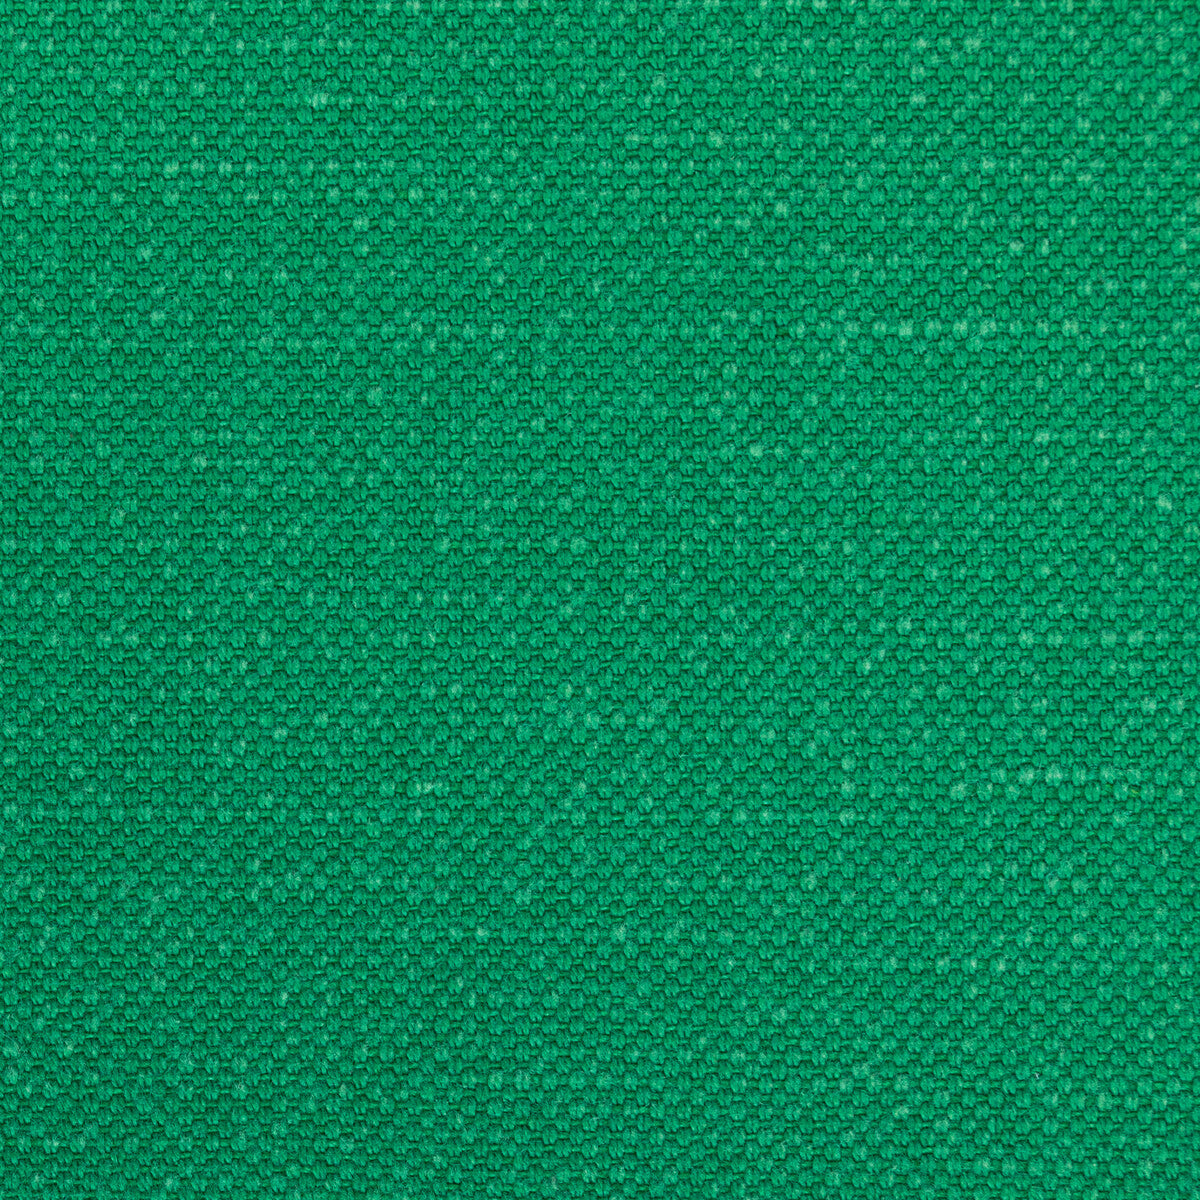 Carson fabric in shamrock color - pattern 36282.3.0 - by Kravet Basics